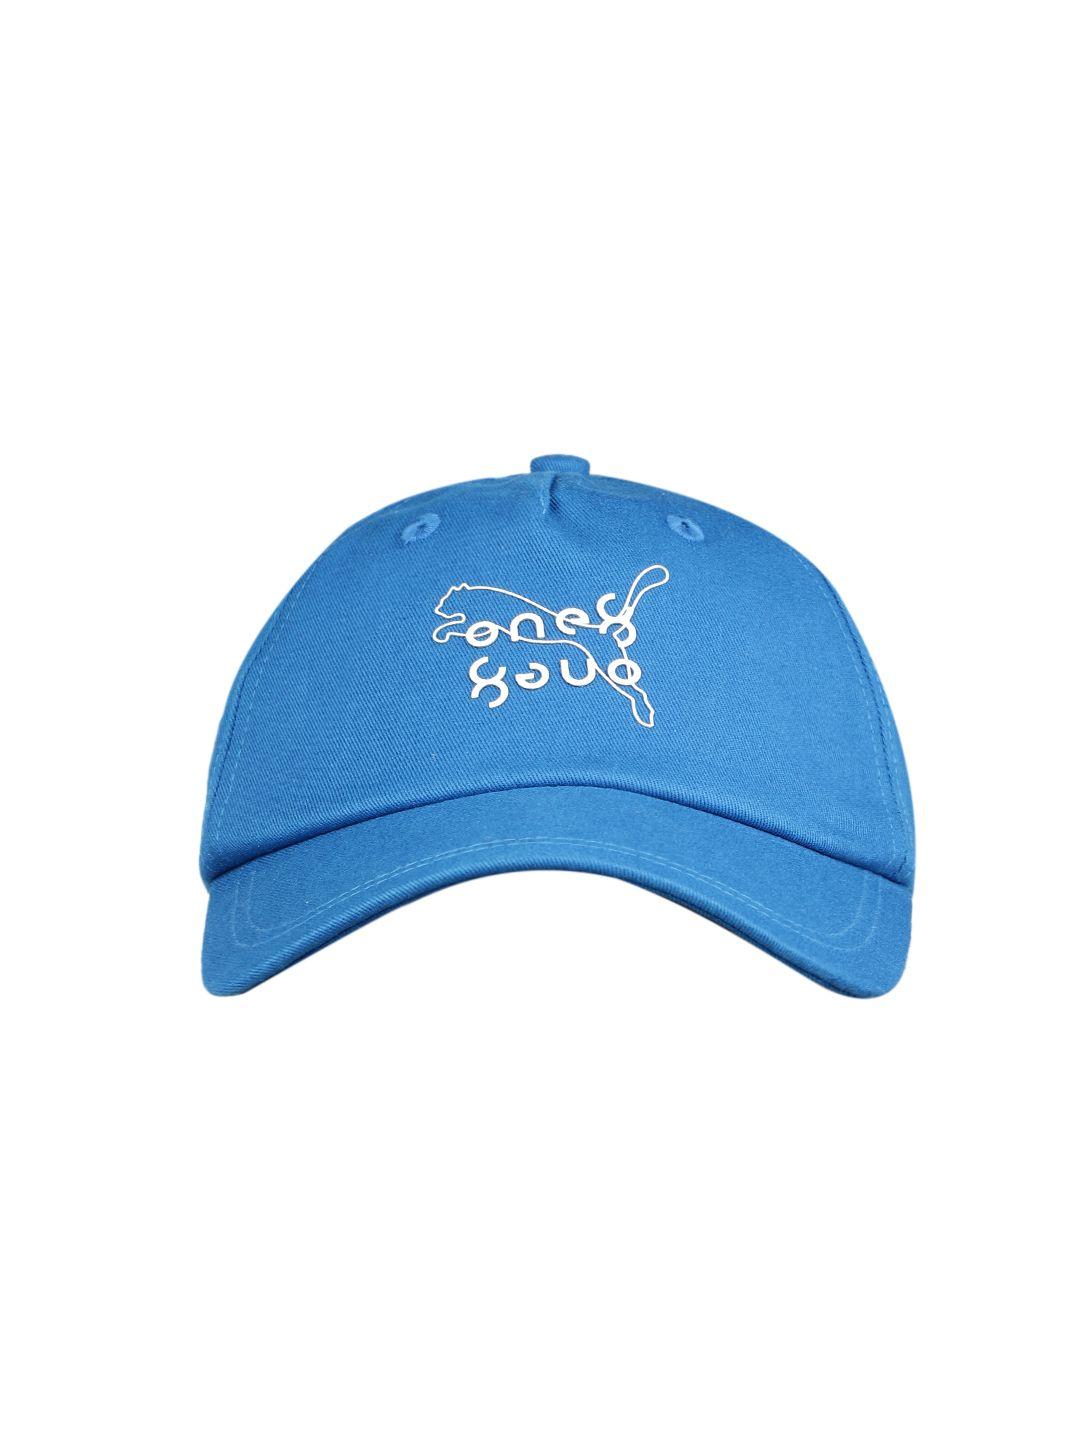 one8 x puma unisex blue brand logo printed snapback cap